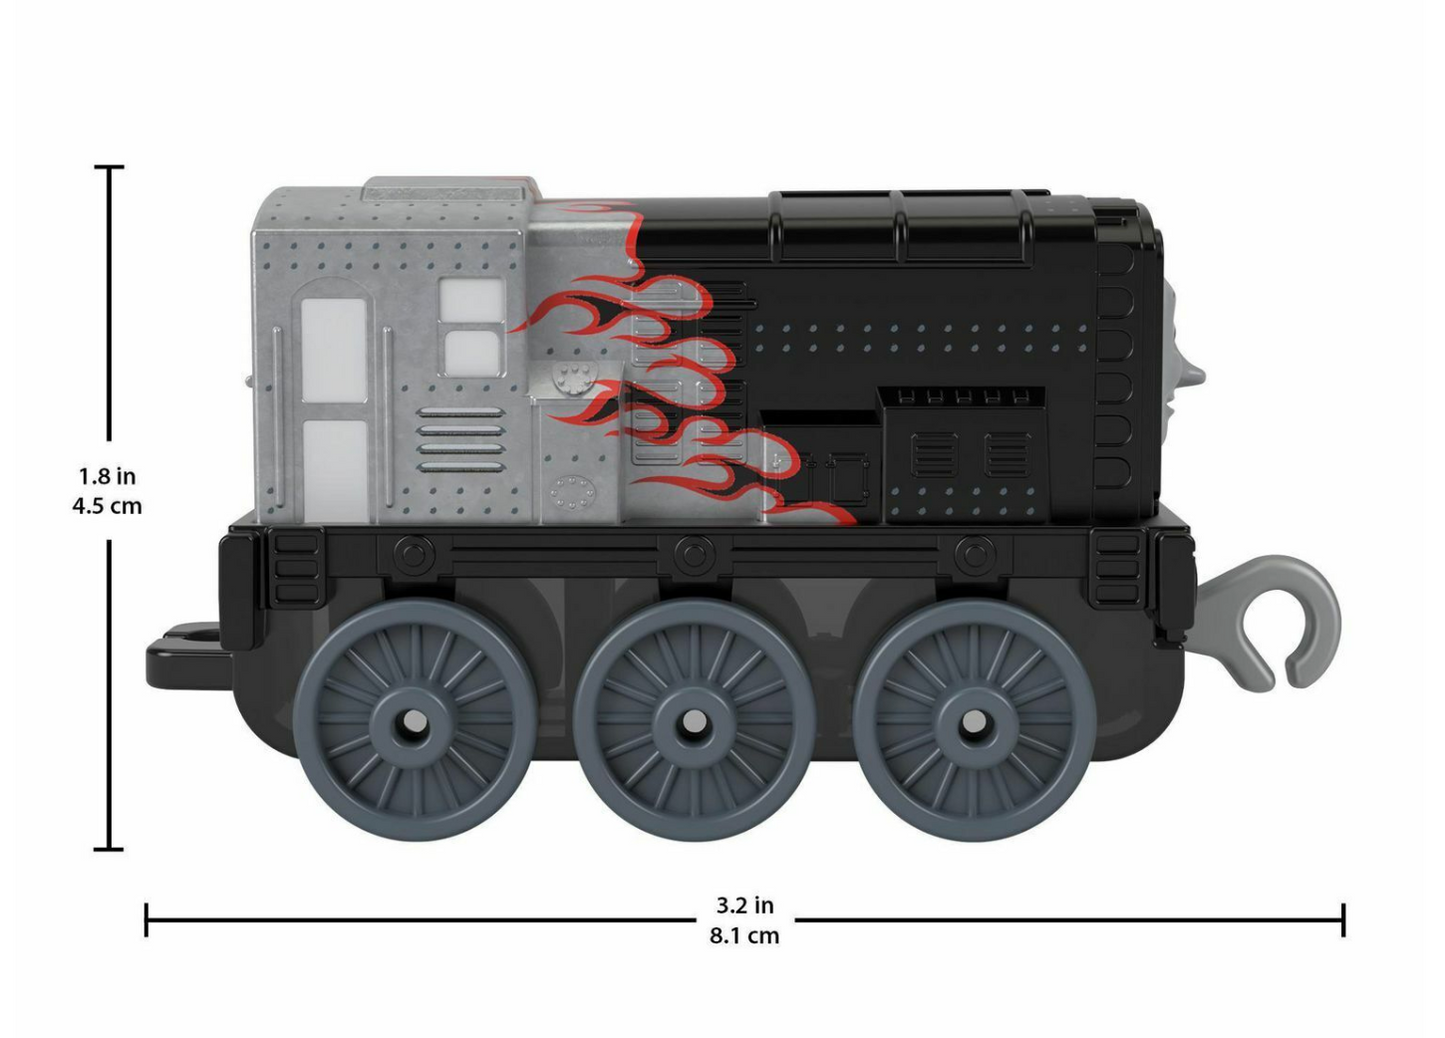 Thomas & Friends Diecast Metal Engine - Fire Diesel